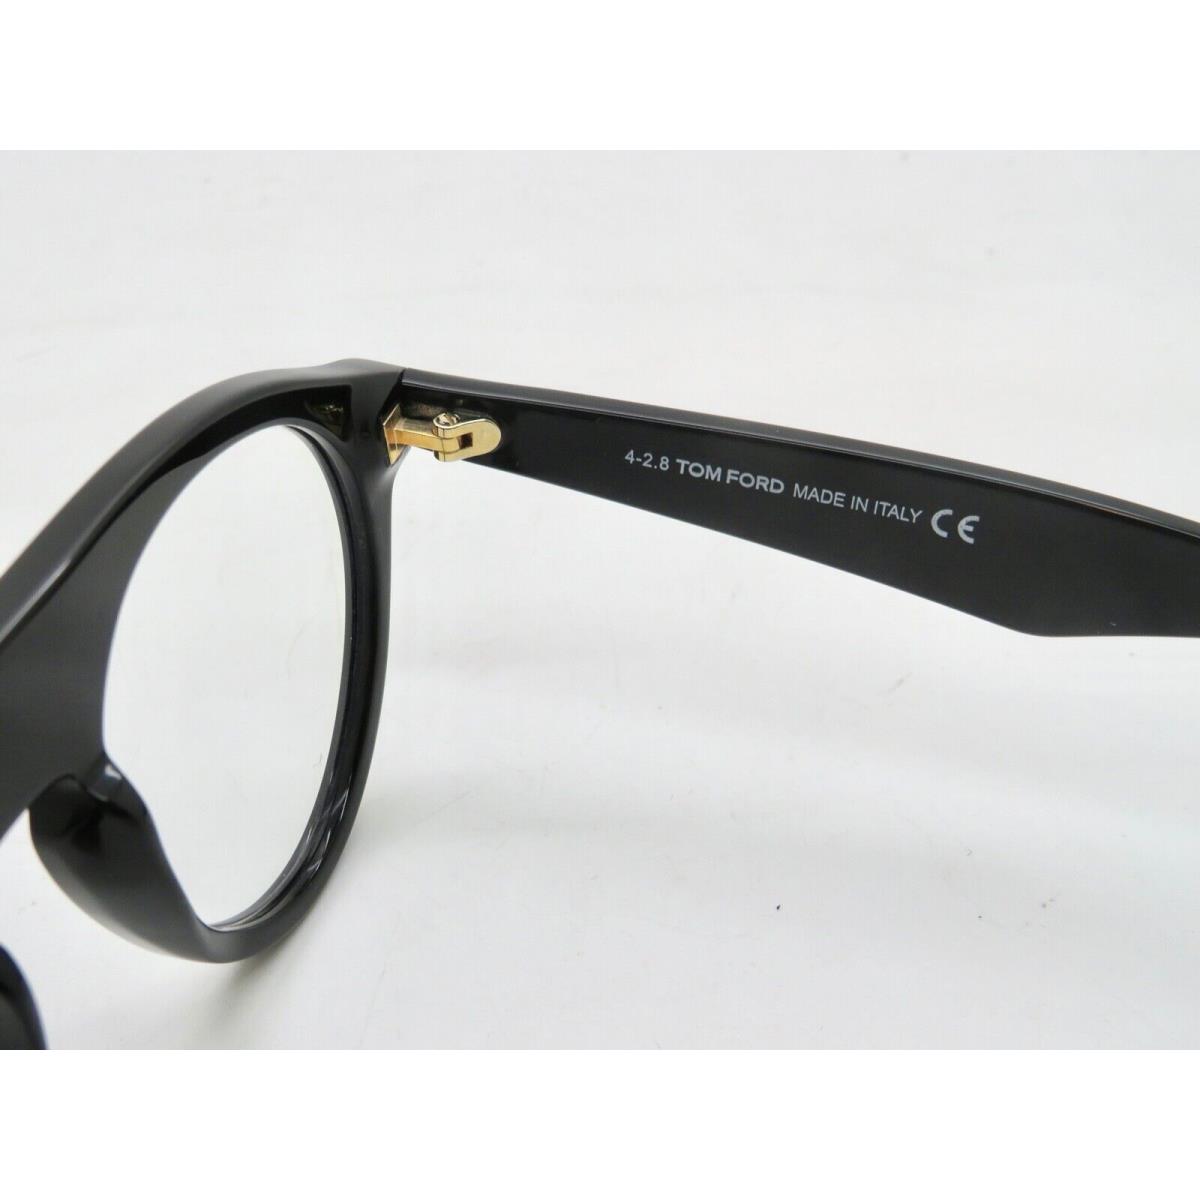 Tom Ford eyeglasses  - Shiny Black Frame, Clear Demo Lens 3